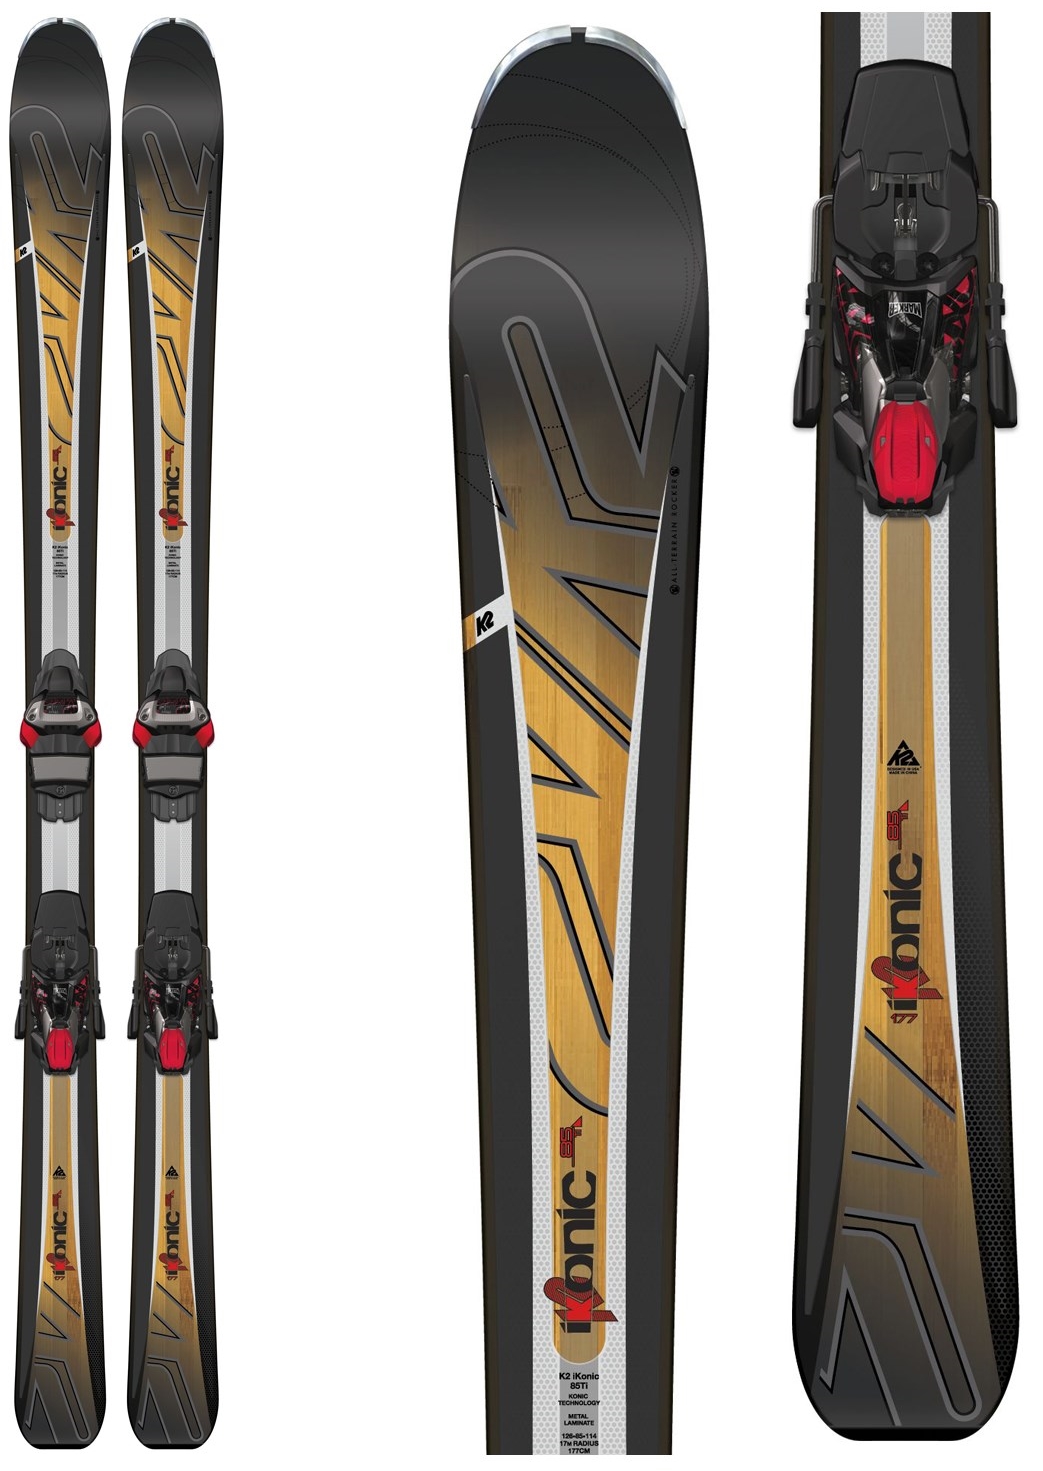 K2 iKonic 85Ti Skis with Marker MXC 12TCx Bindings, $900